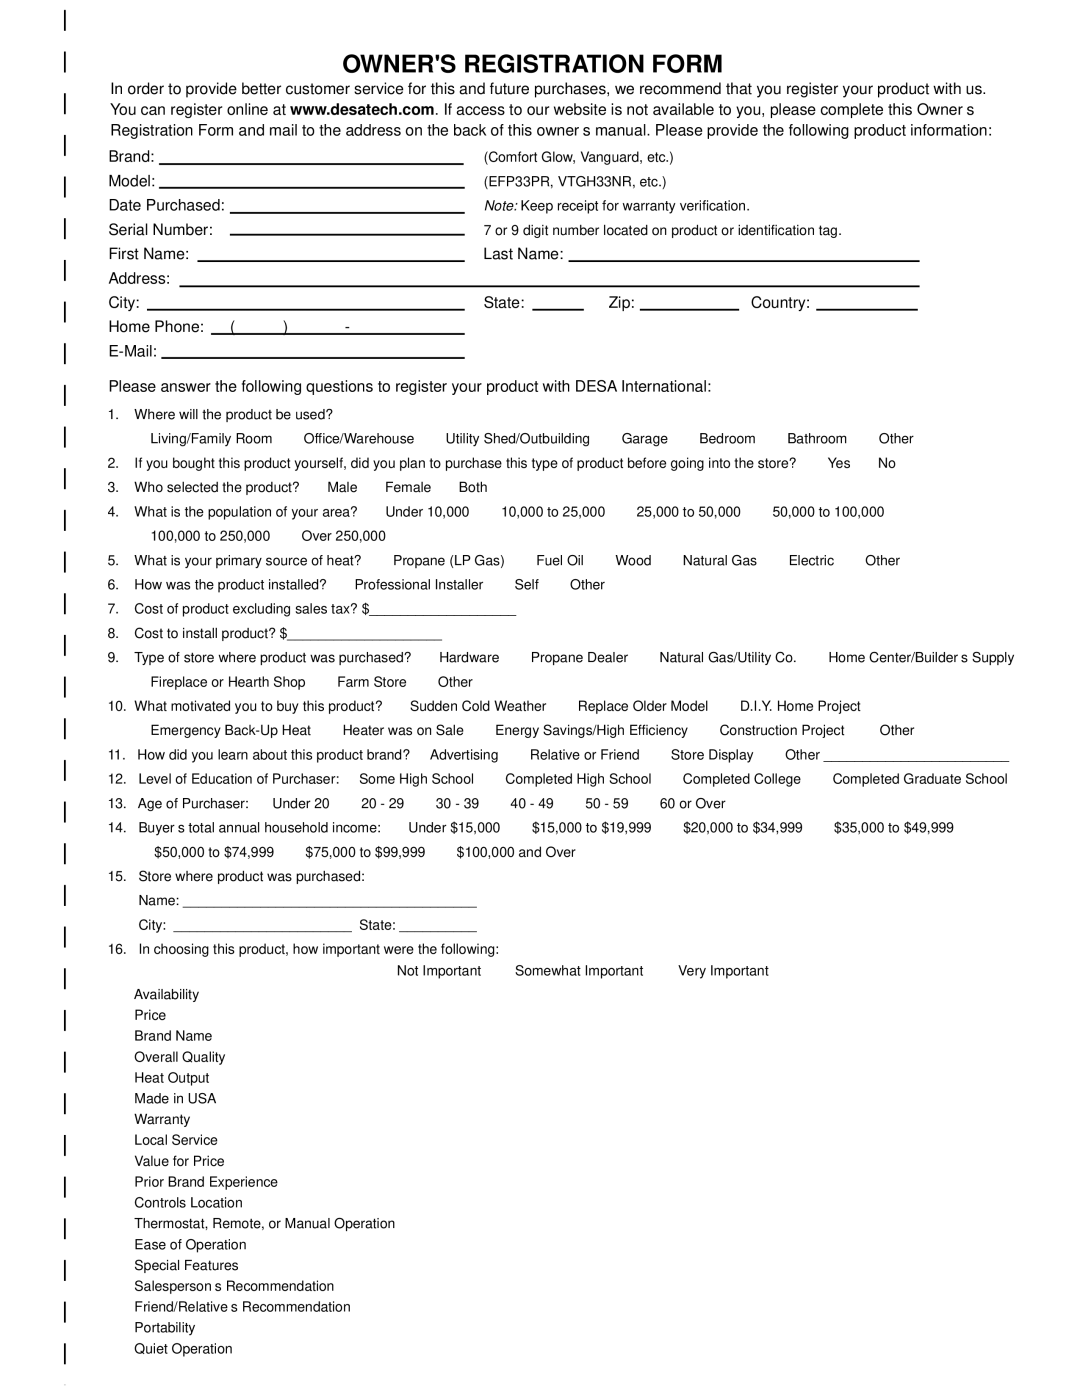 Desa installation manual Owners Registration Form 